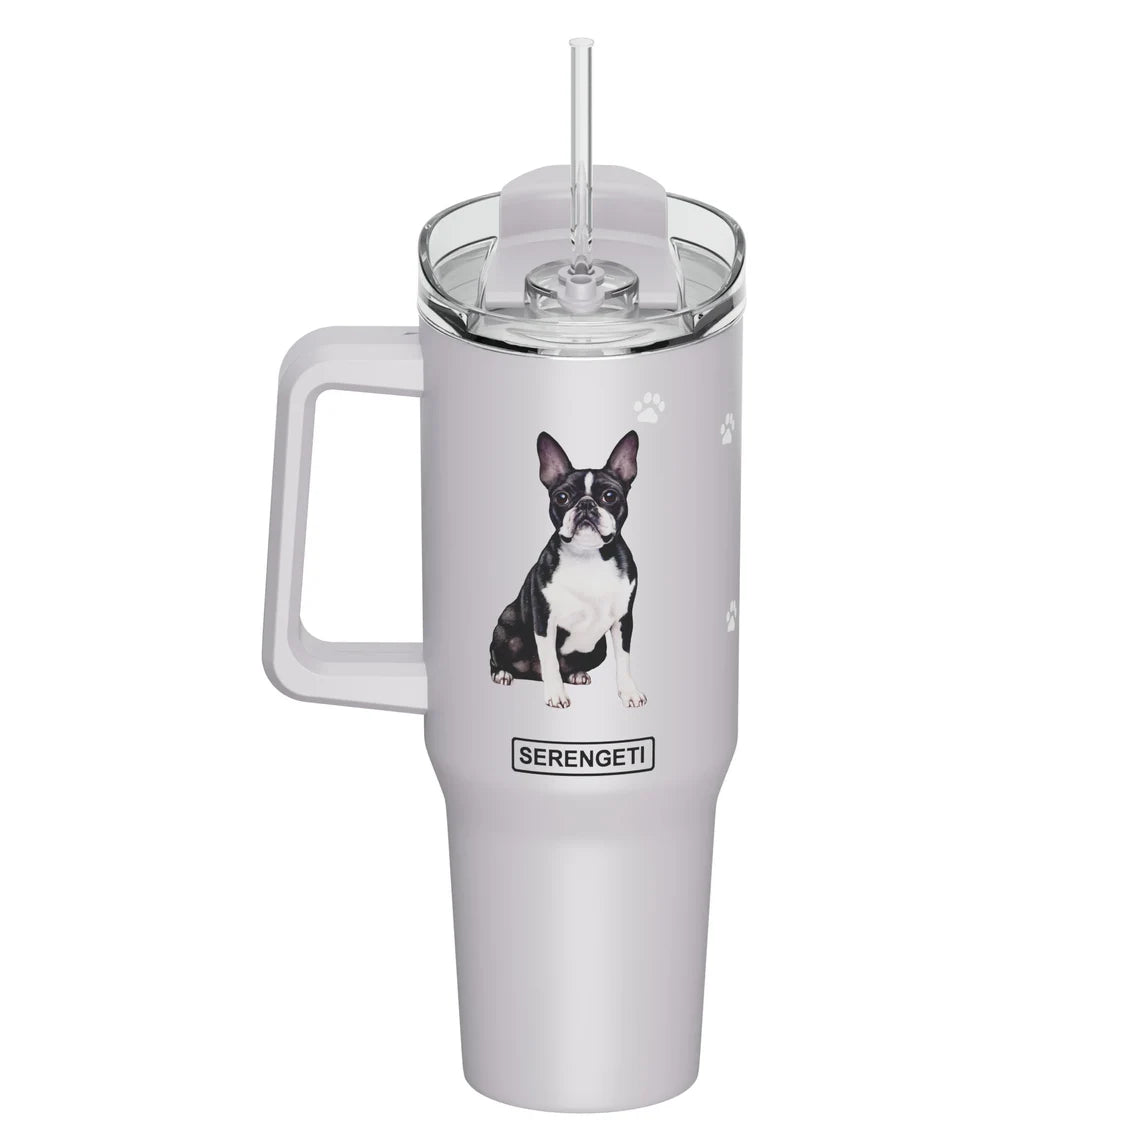 SERENGETI Stainless Steel Mug 40oz - Boston Terrier